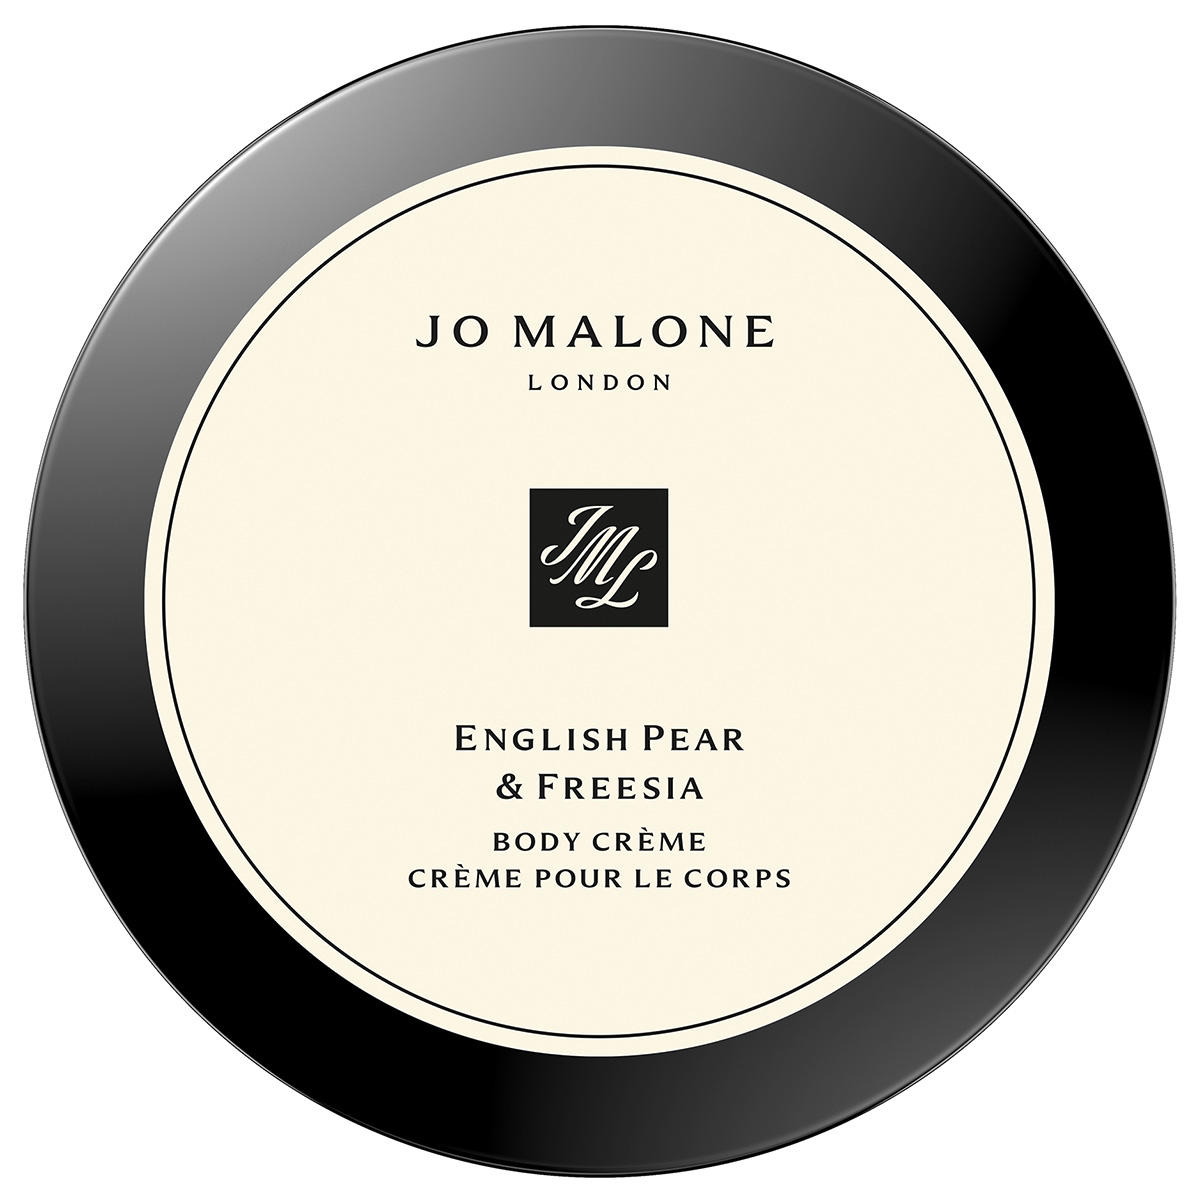 JO MALONE LONDON English Pear & Freesia Body Creme 175 ml - 1